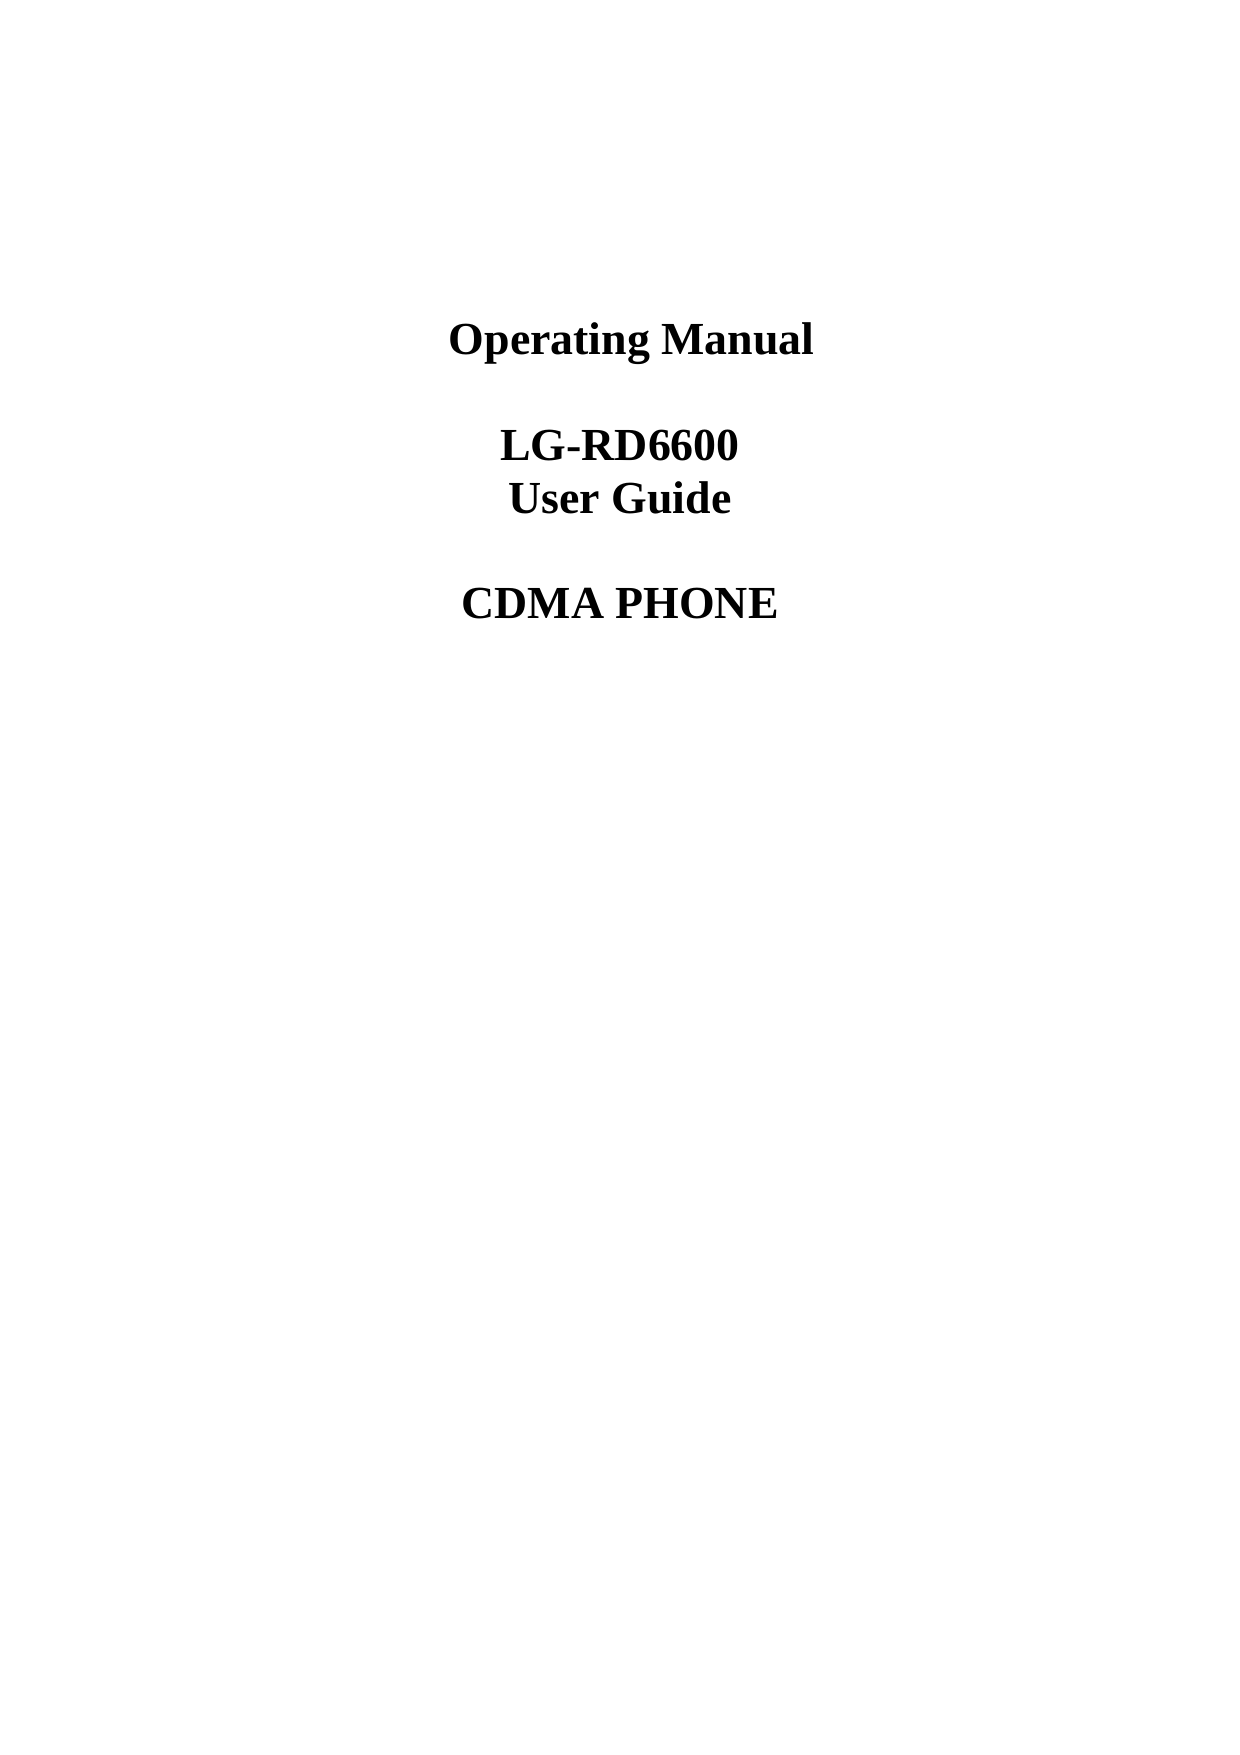    Operating Manual  LG-RD6600 User Guide  CDMA PHONE                          